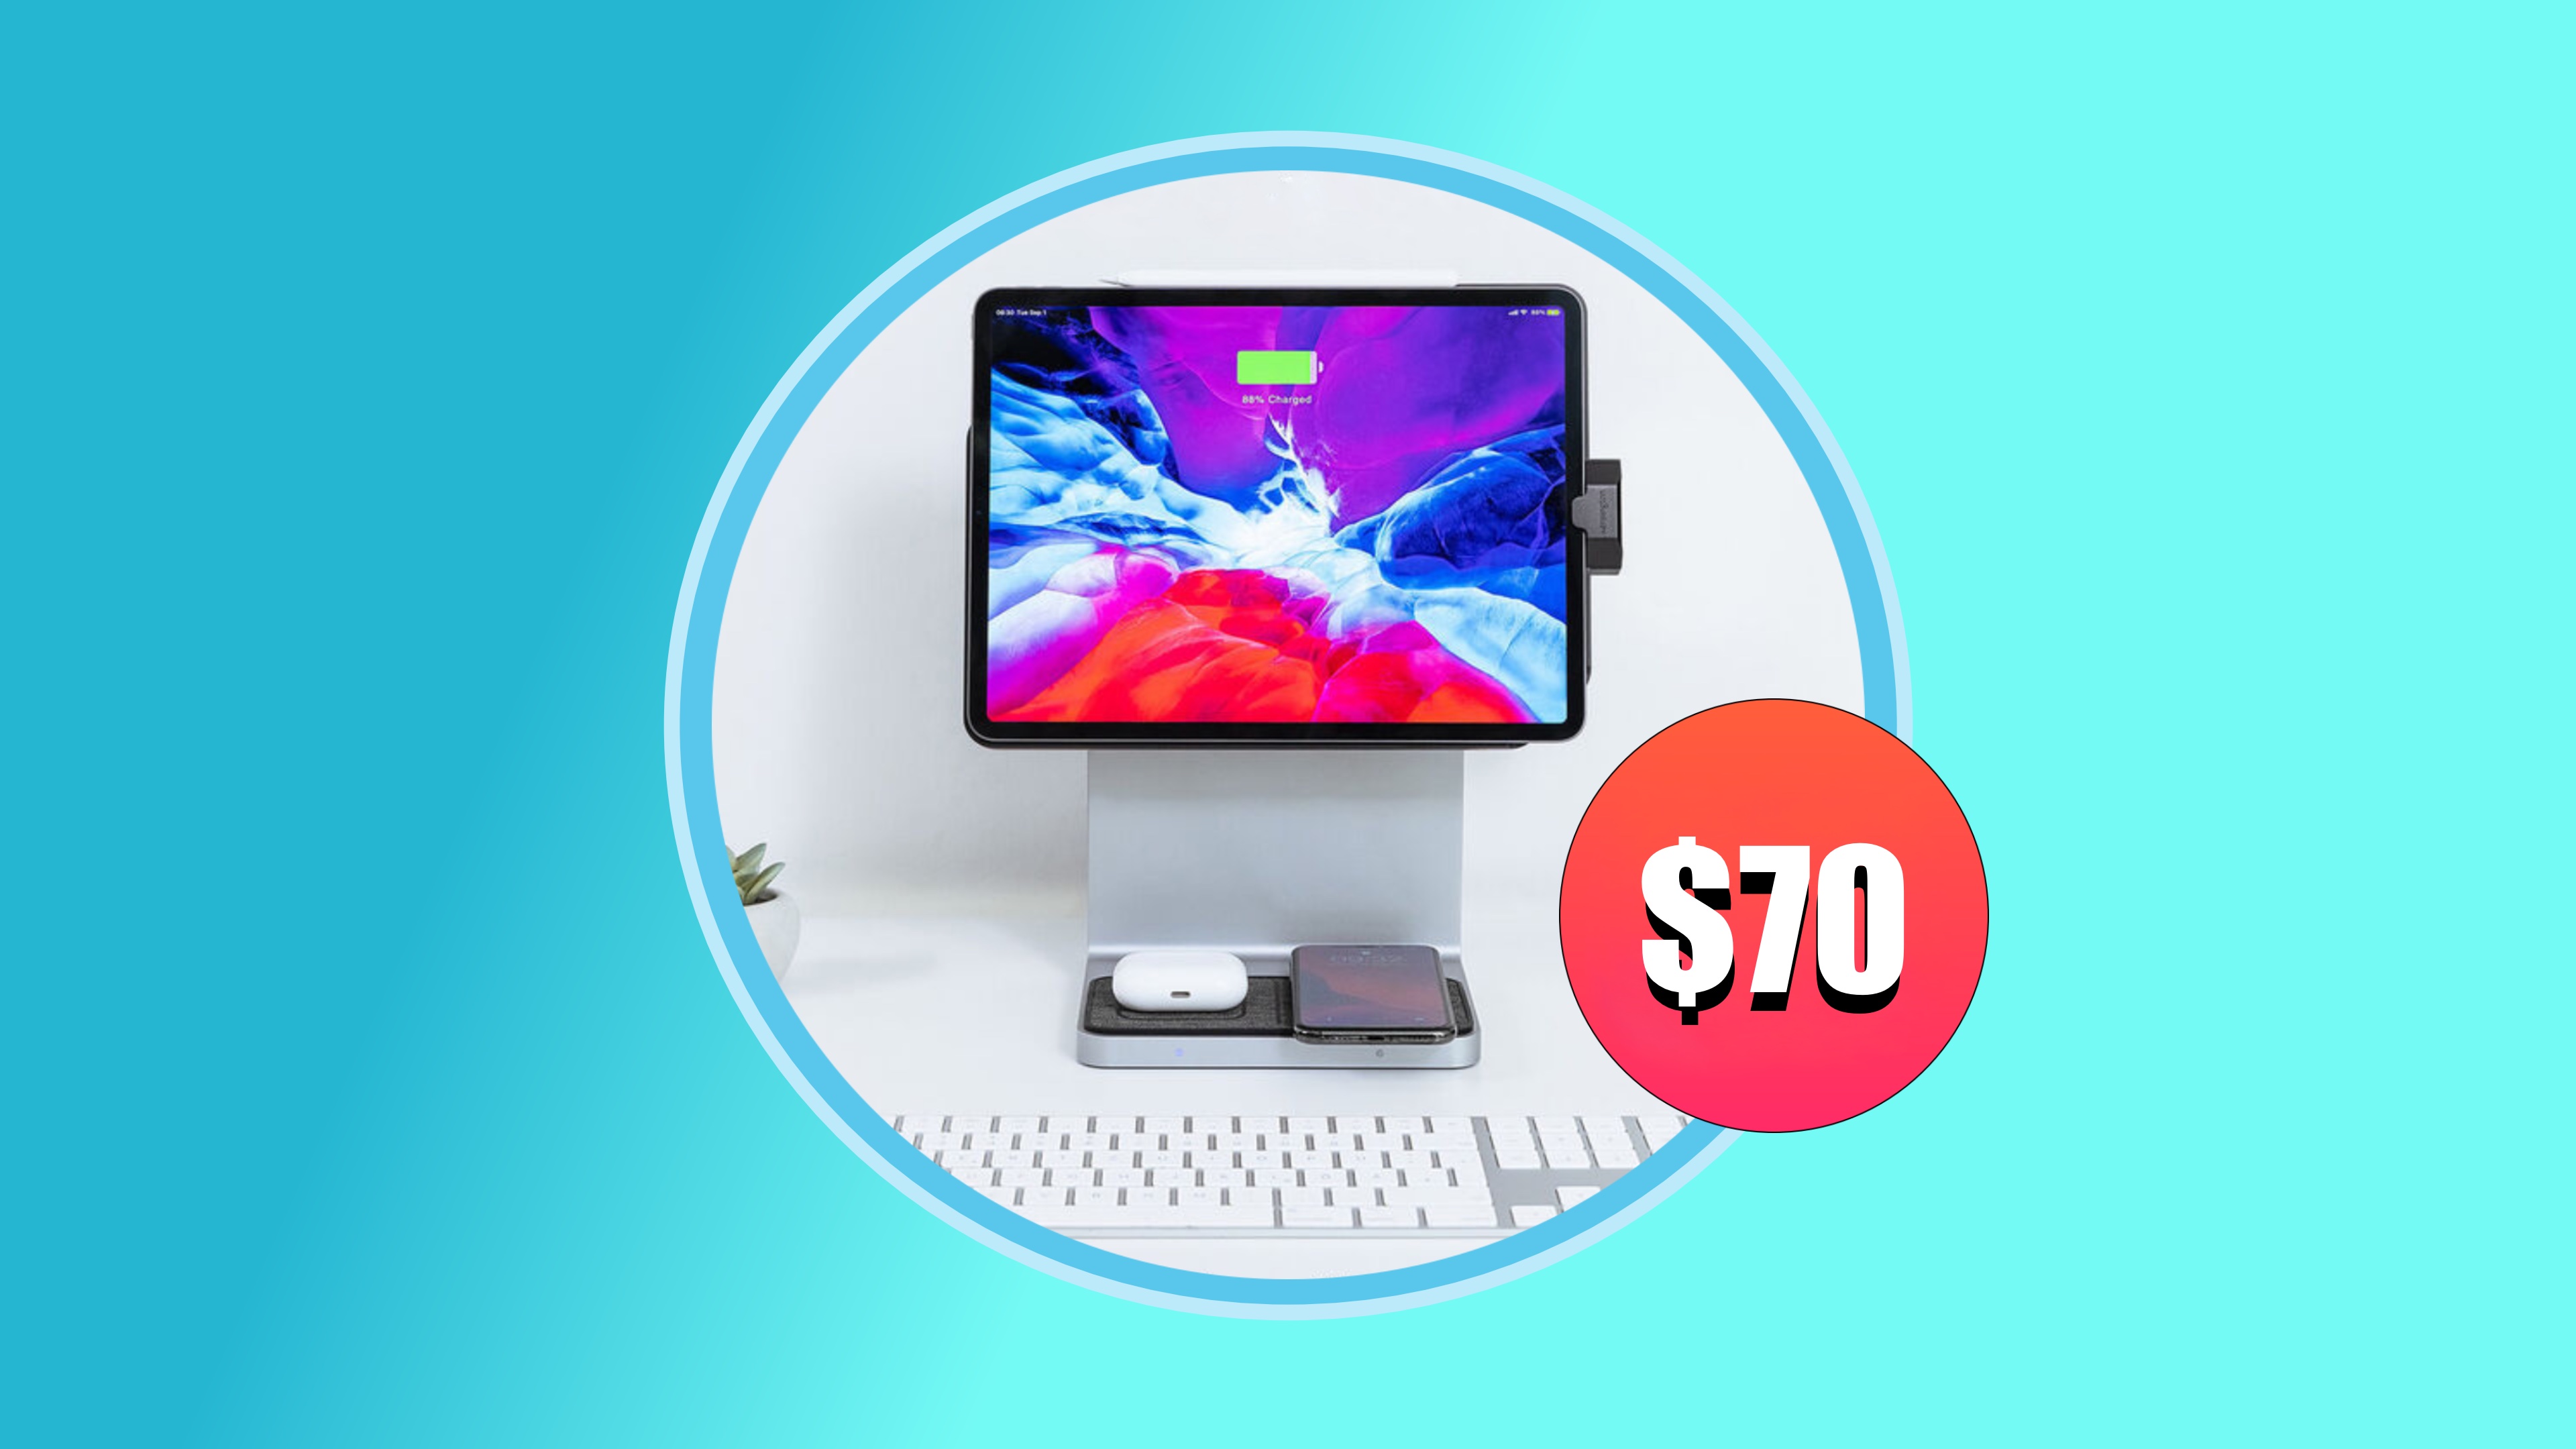 Get Kensington’s premium StudioDock iPad station for just $70—today only!